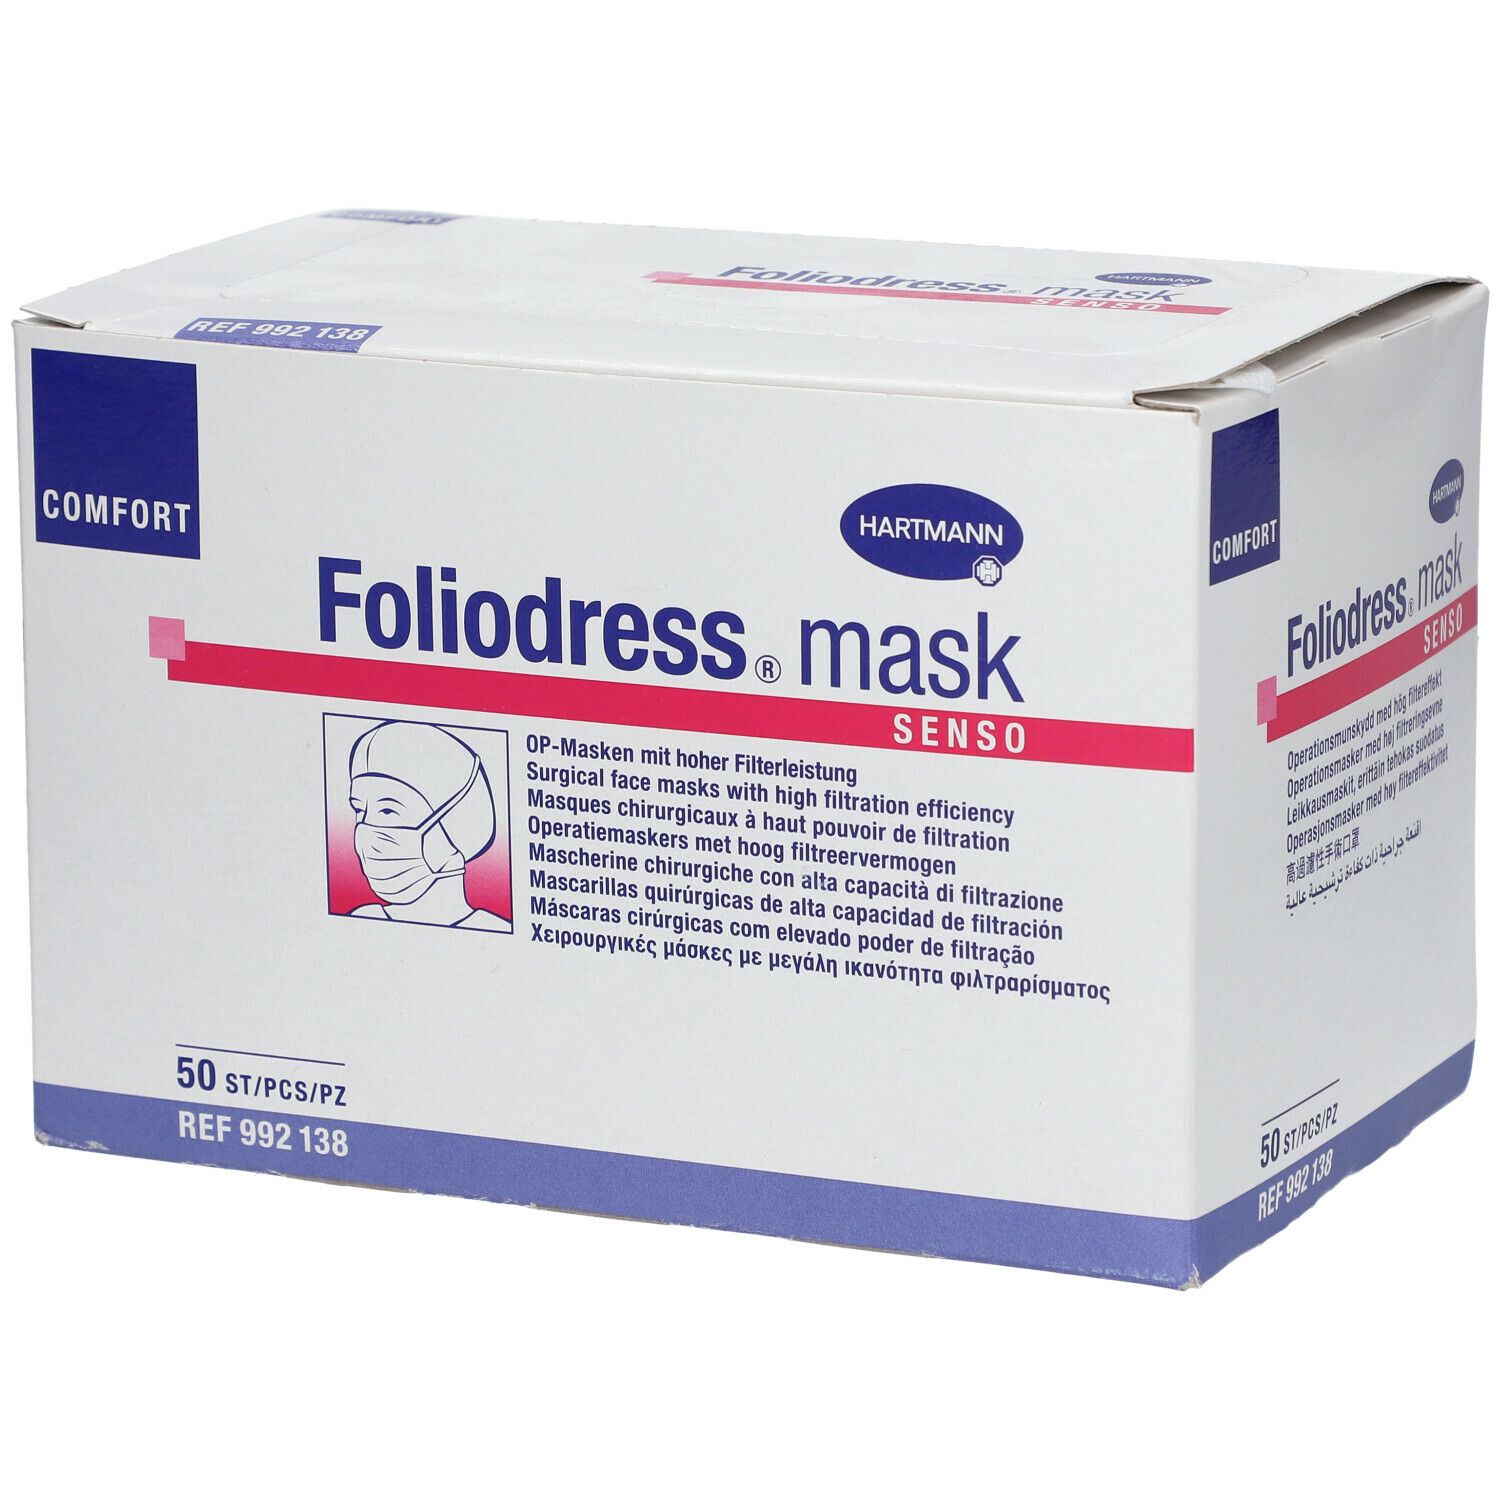 Image of Foliodress® Mask Comfort